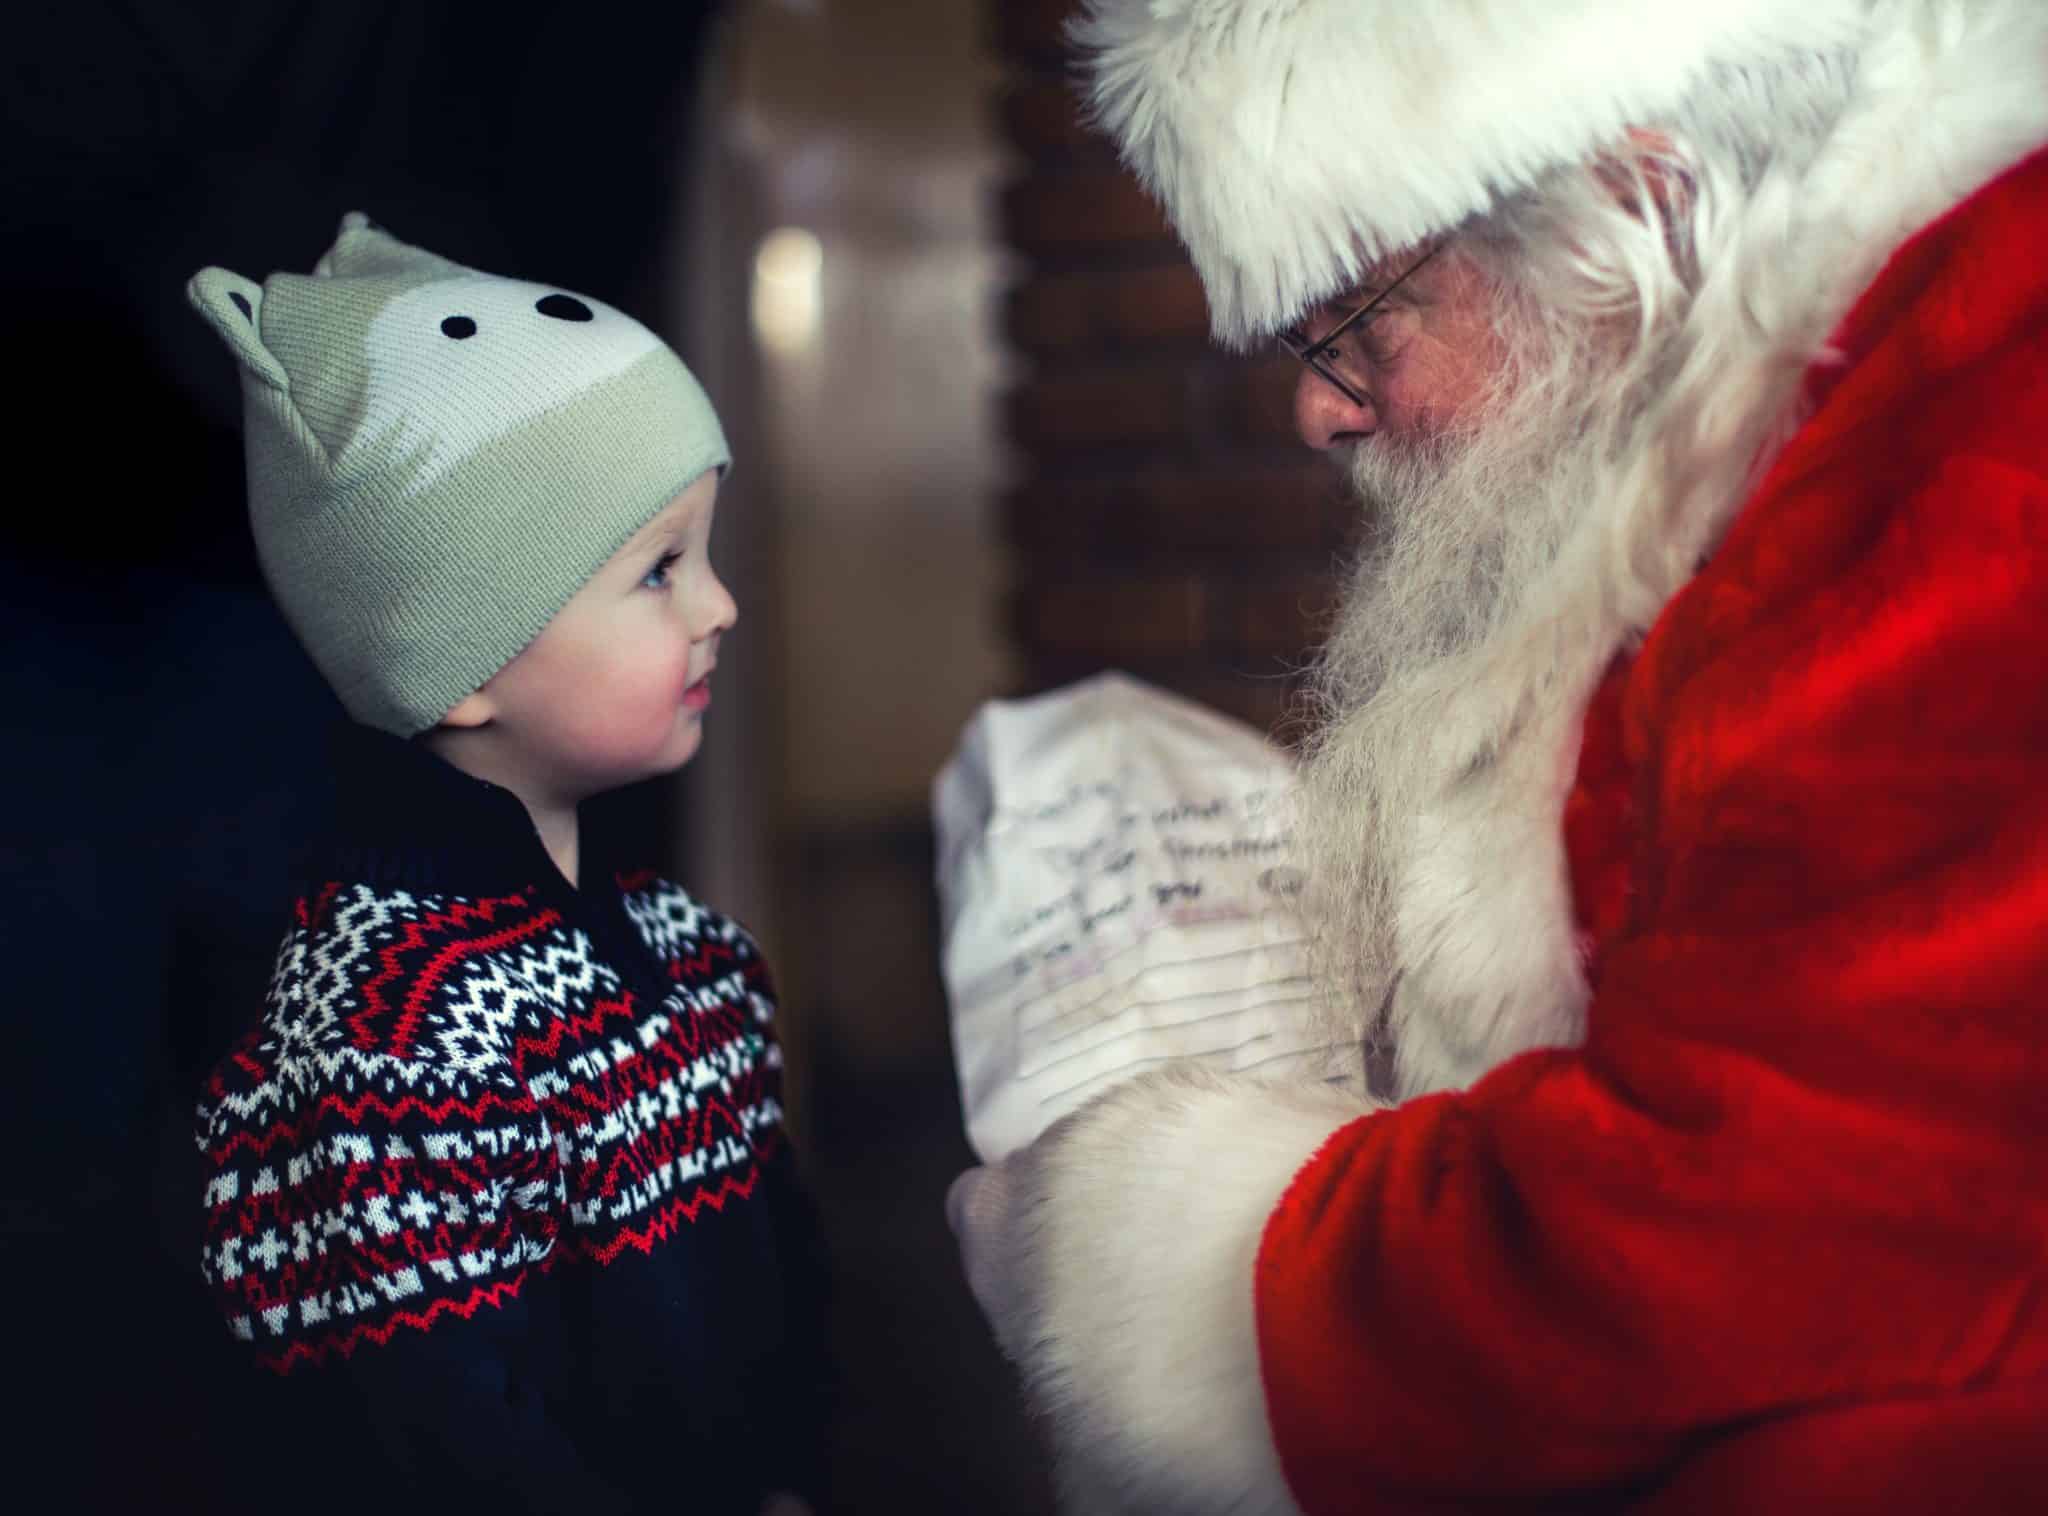 Santa talking to a little boy